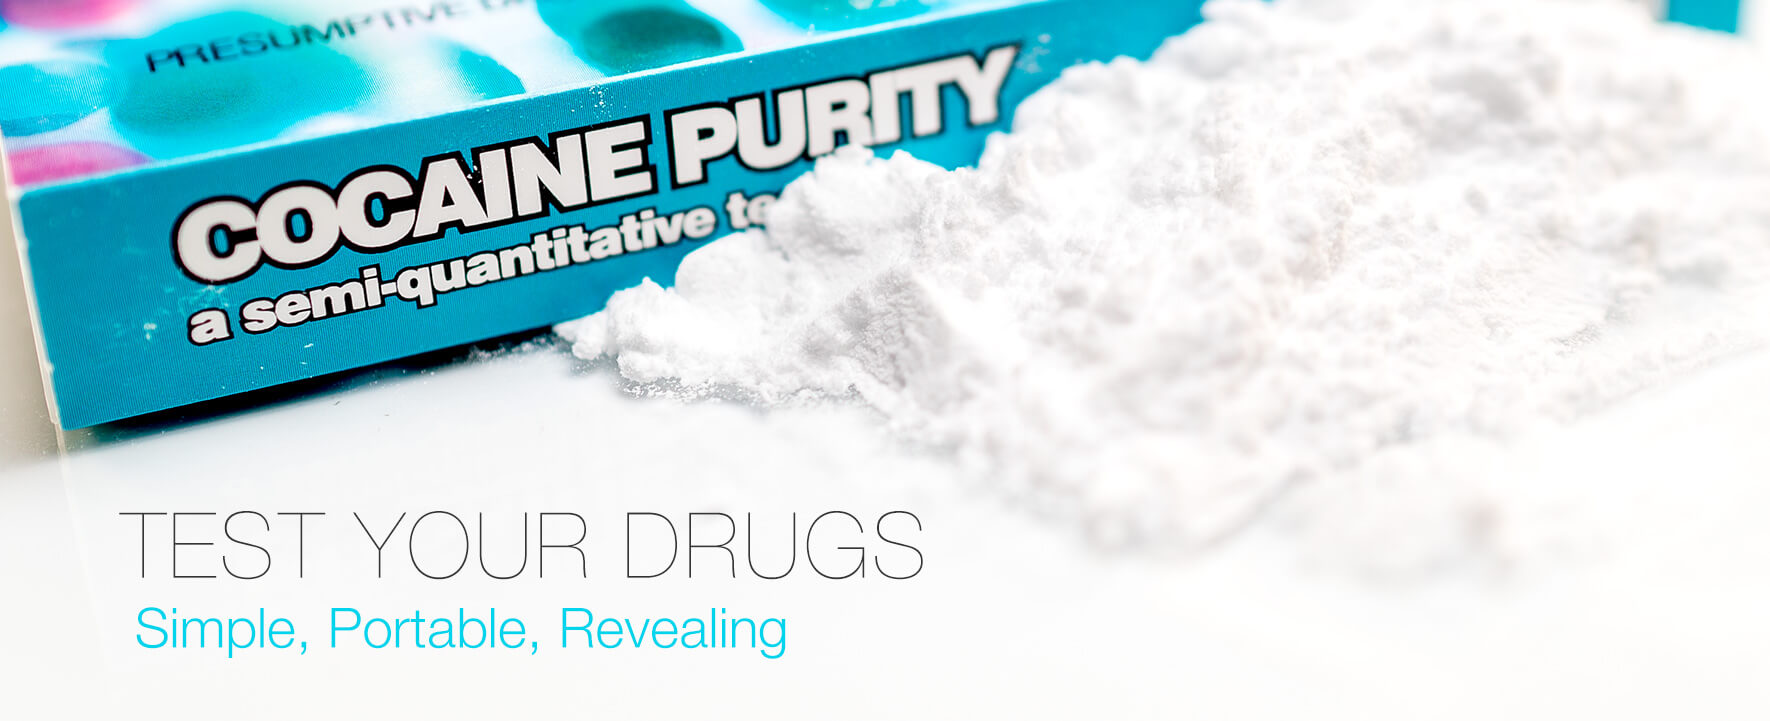 EZ Test Cocaine Purity - Single Pack ✓ kaufen